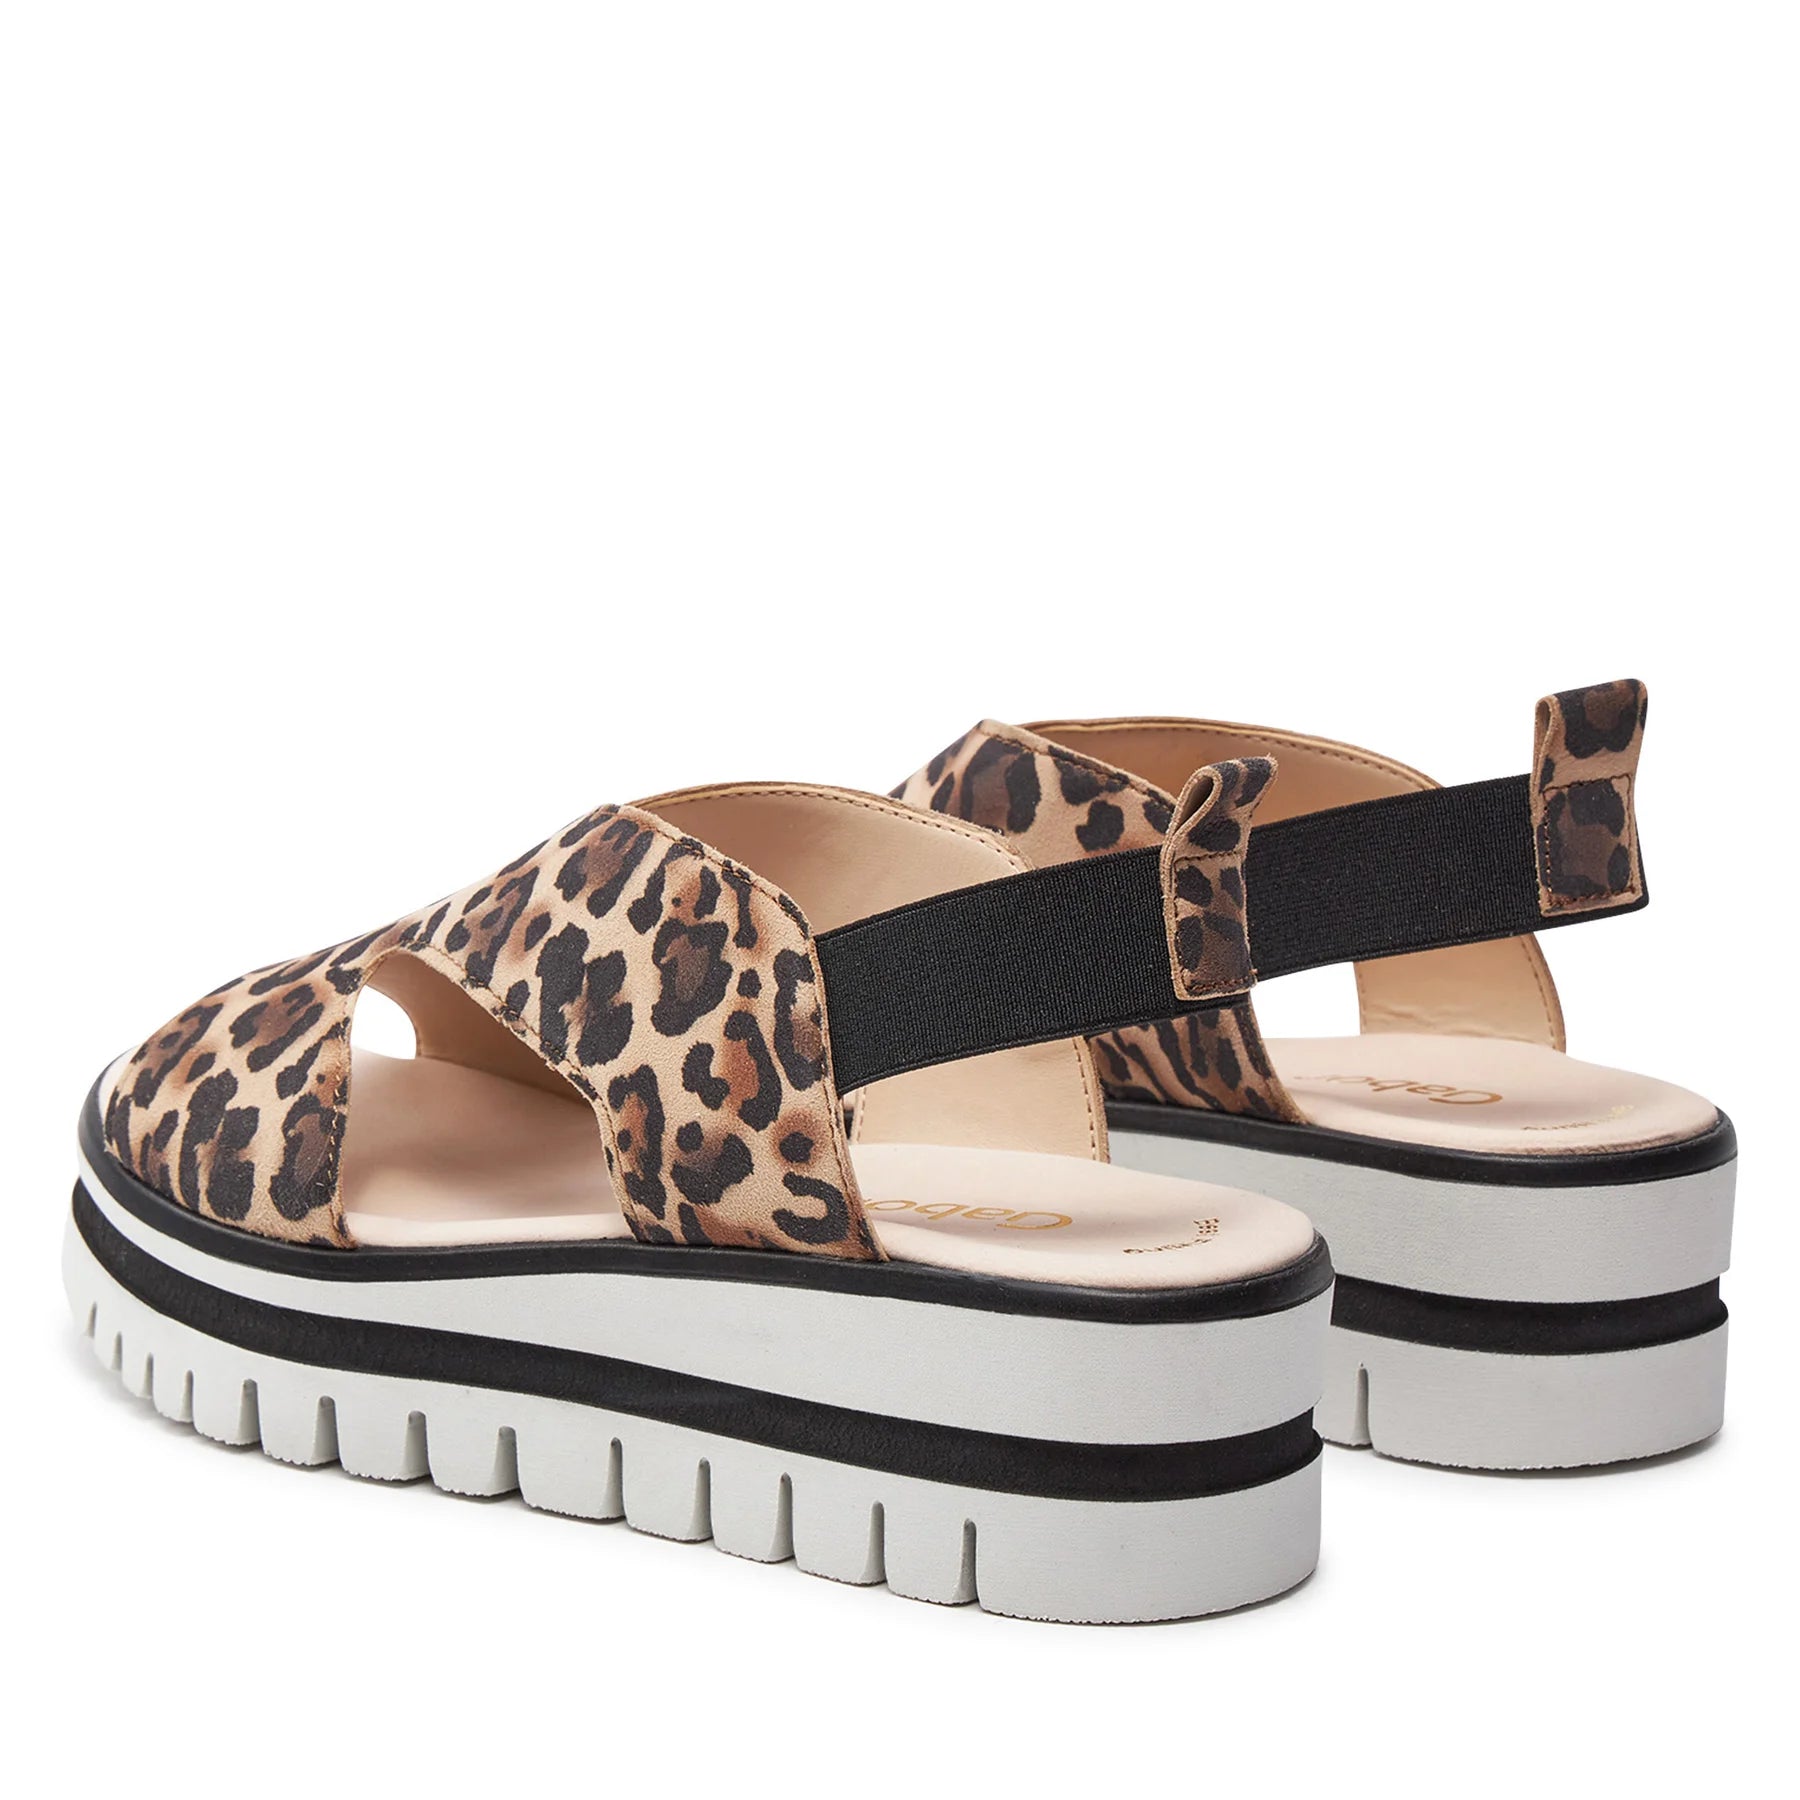 Gabor "44-623" Leopard - Wedge Sandal